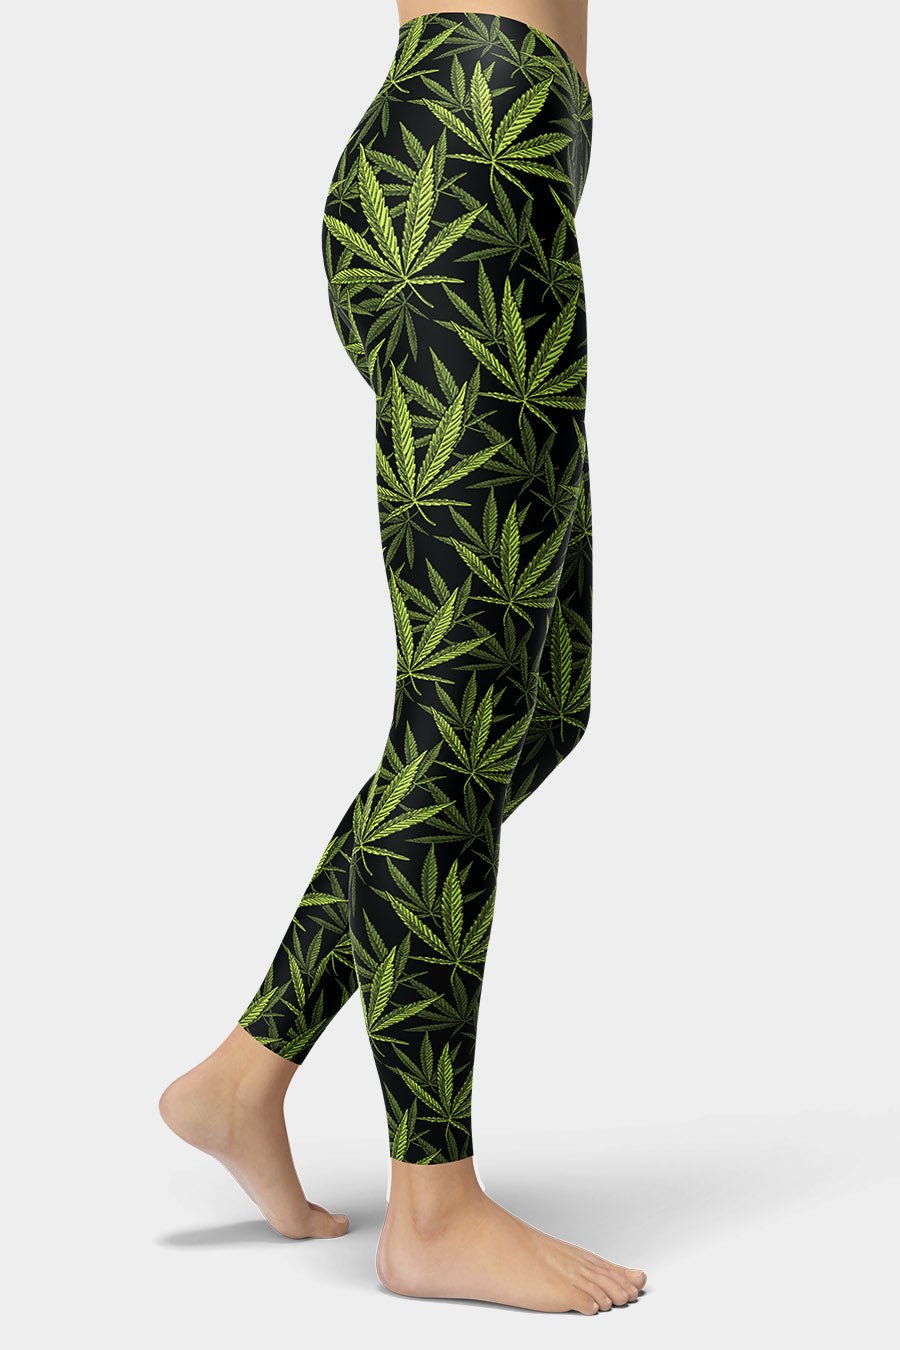 Green Marijuana Leaf Leggings - SeeMyLeggings